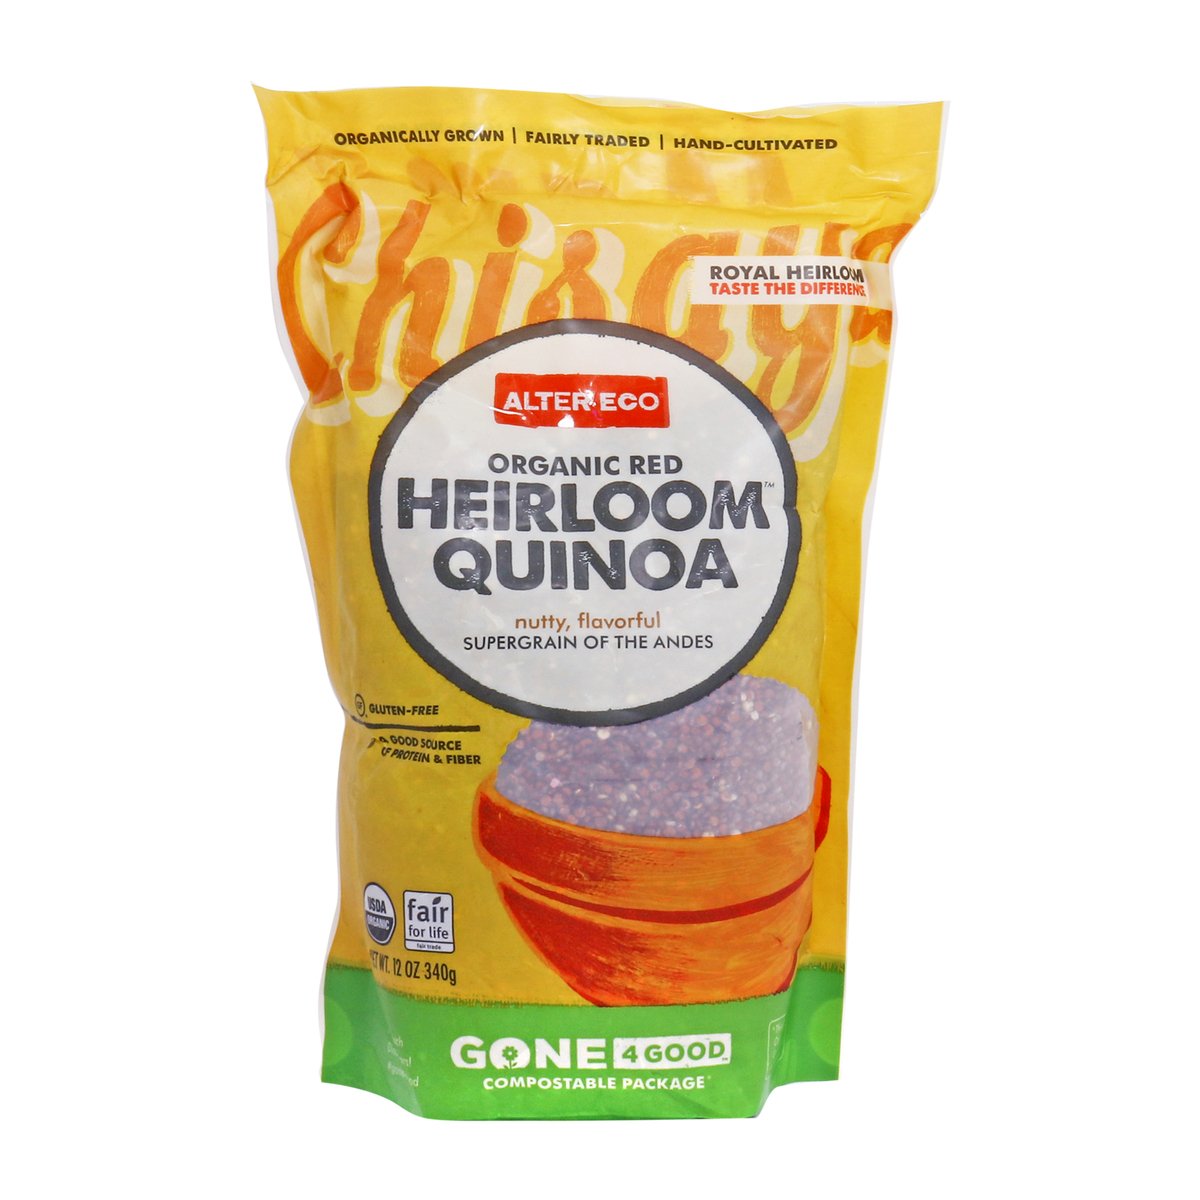 Alter Eco Organic Red Heirloom Quinoa 340 g